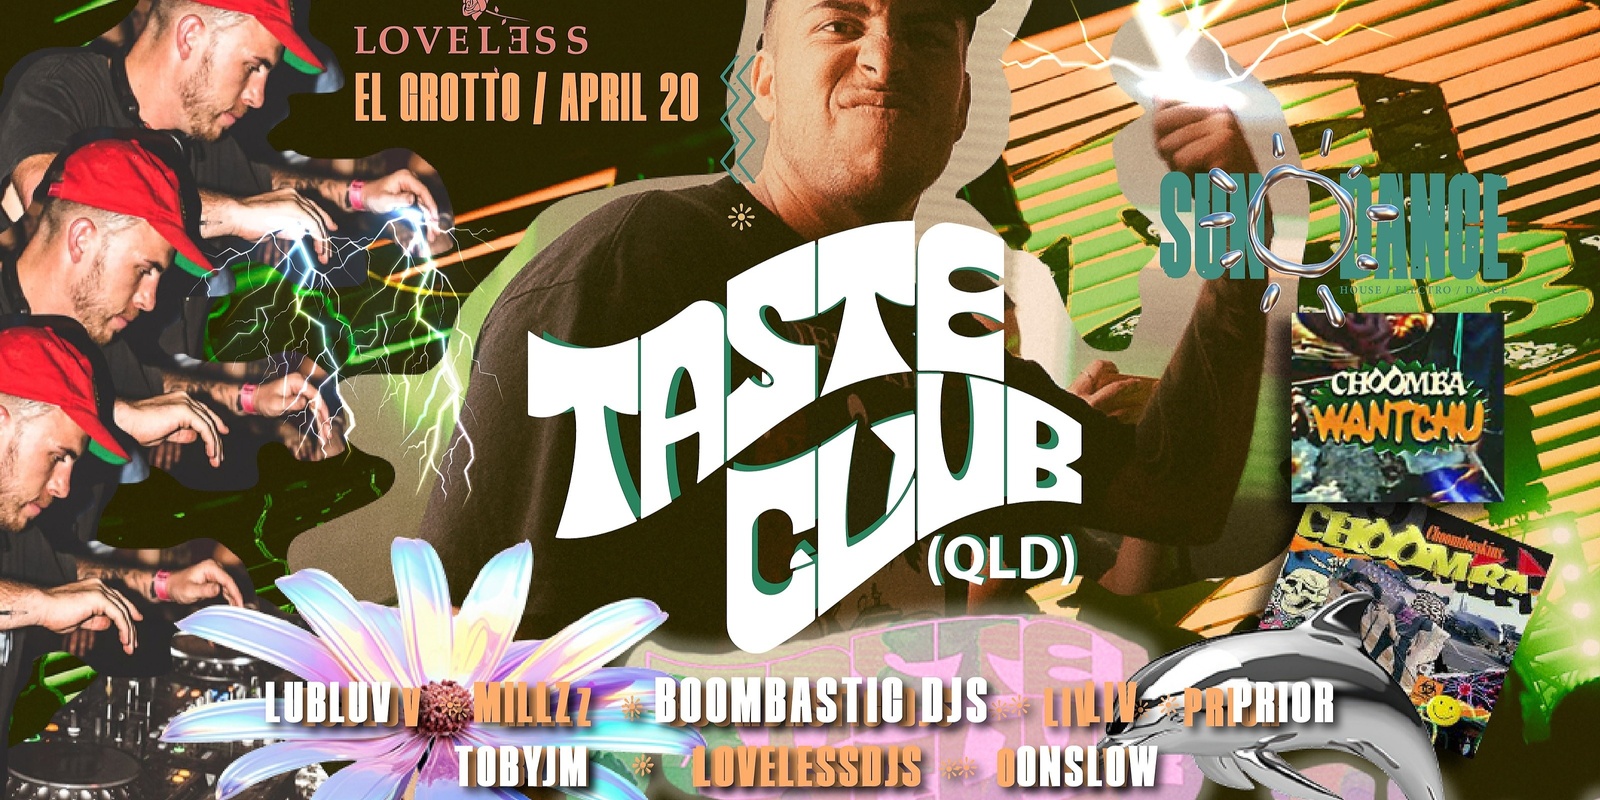 Banner image for Taste Club (QLD) // Sundance X Loveless @ El Grotto 